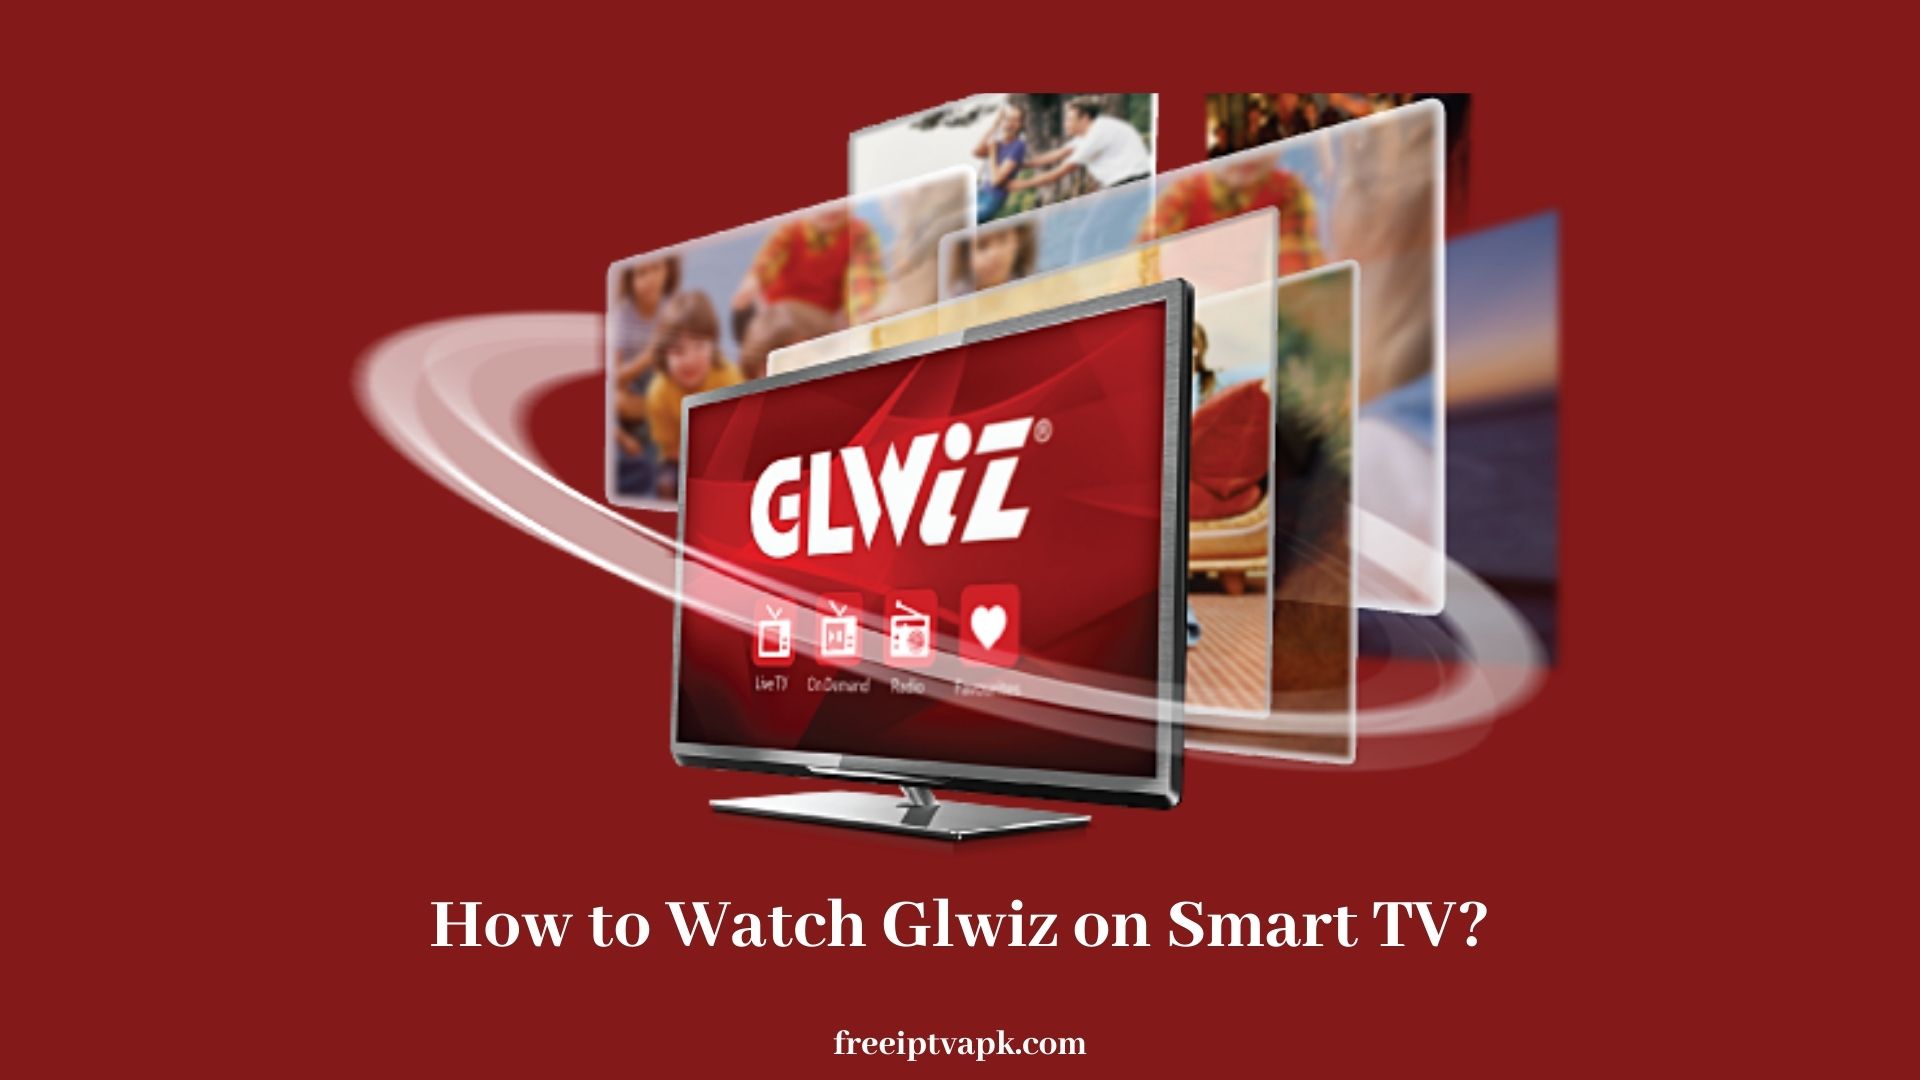 How to Watch Glwiz on Smart TV